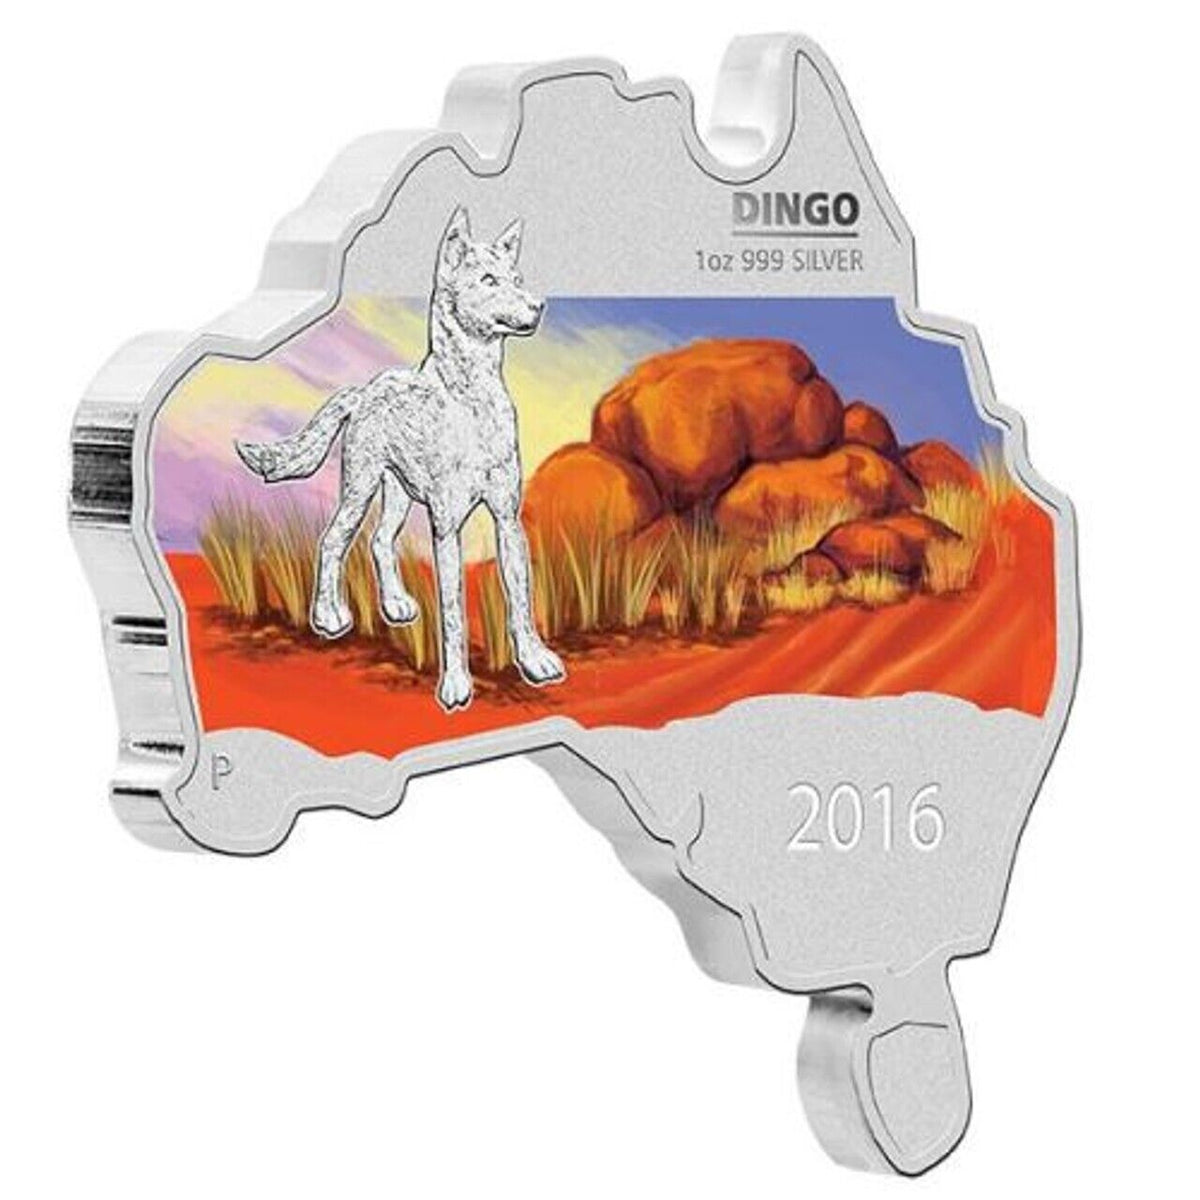 1 Oz Silver Coin 2016 $1 Australia Australian Map Shaped Coin - Dingo-classypw.com-1